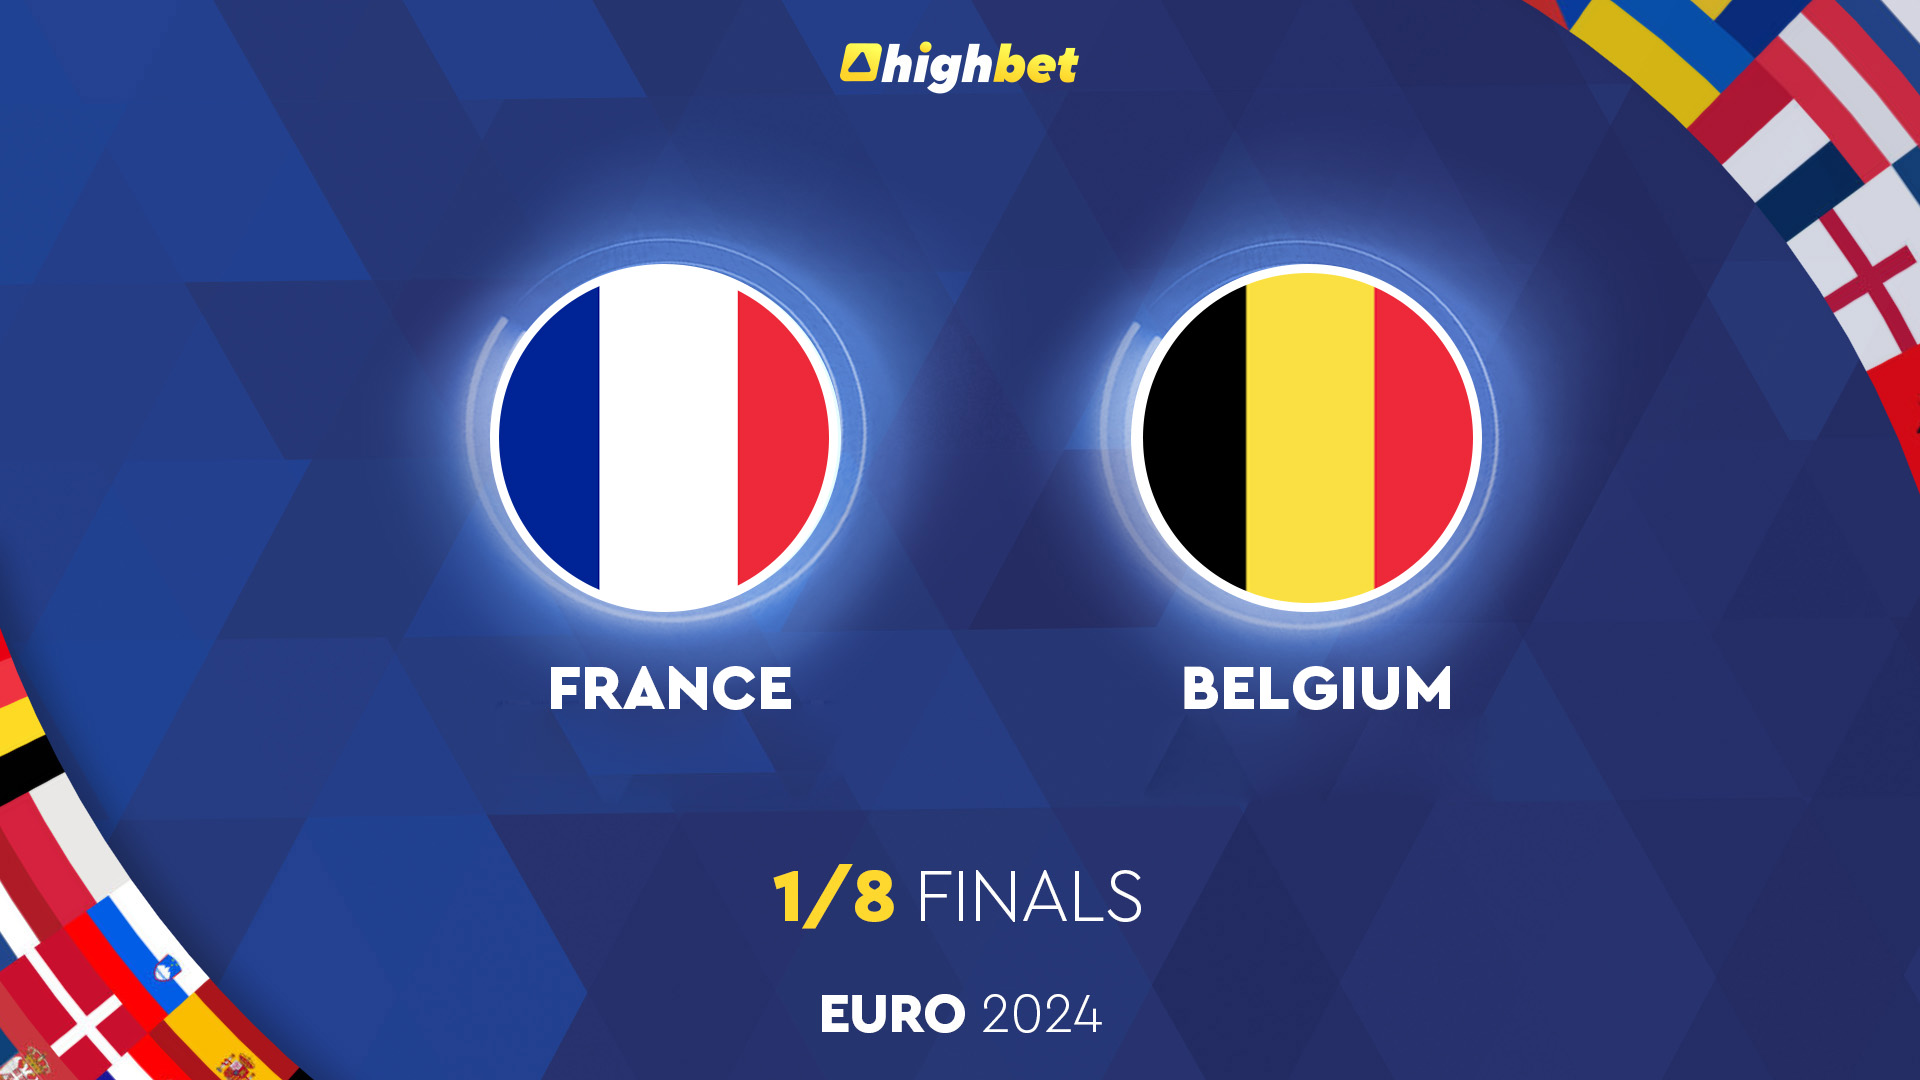 France vs Belgium - Euro 2024 - HighBet Blog